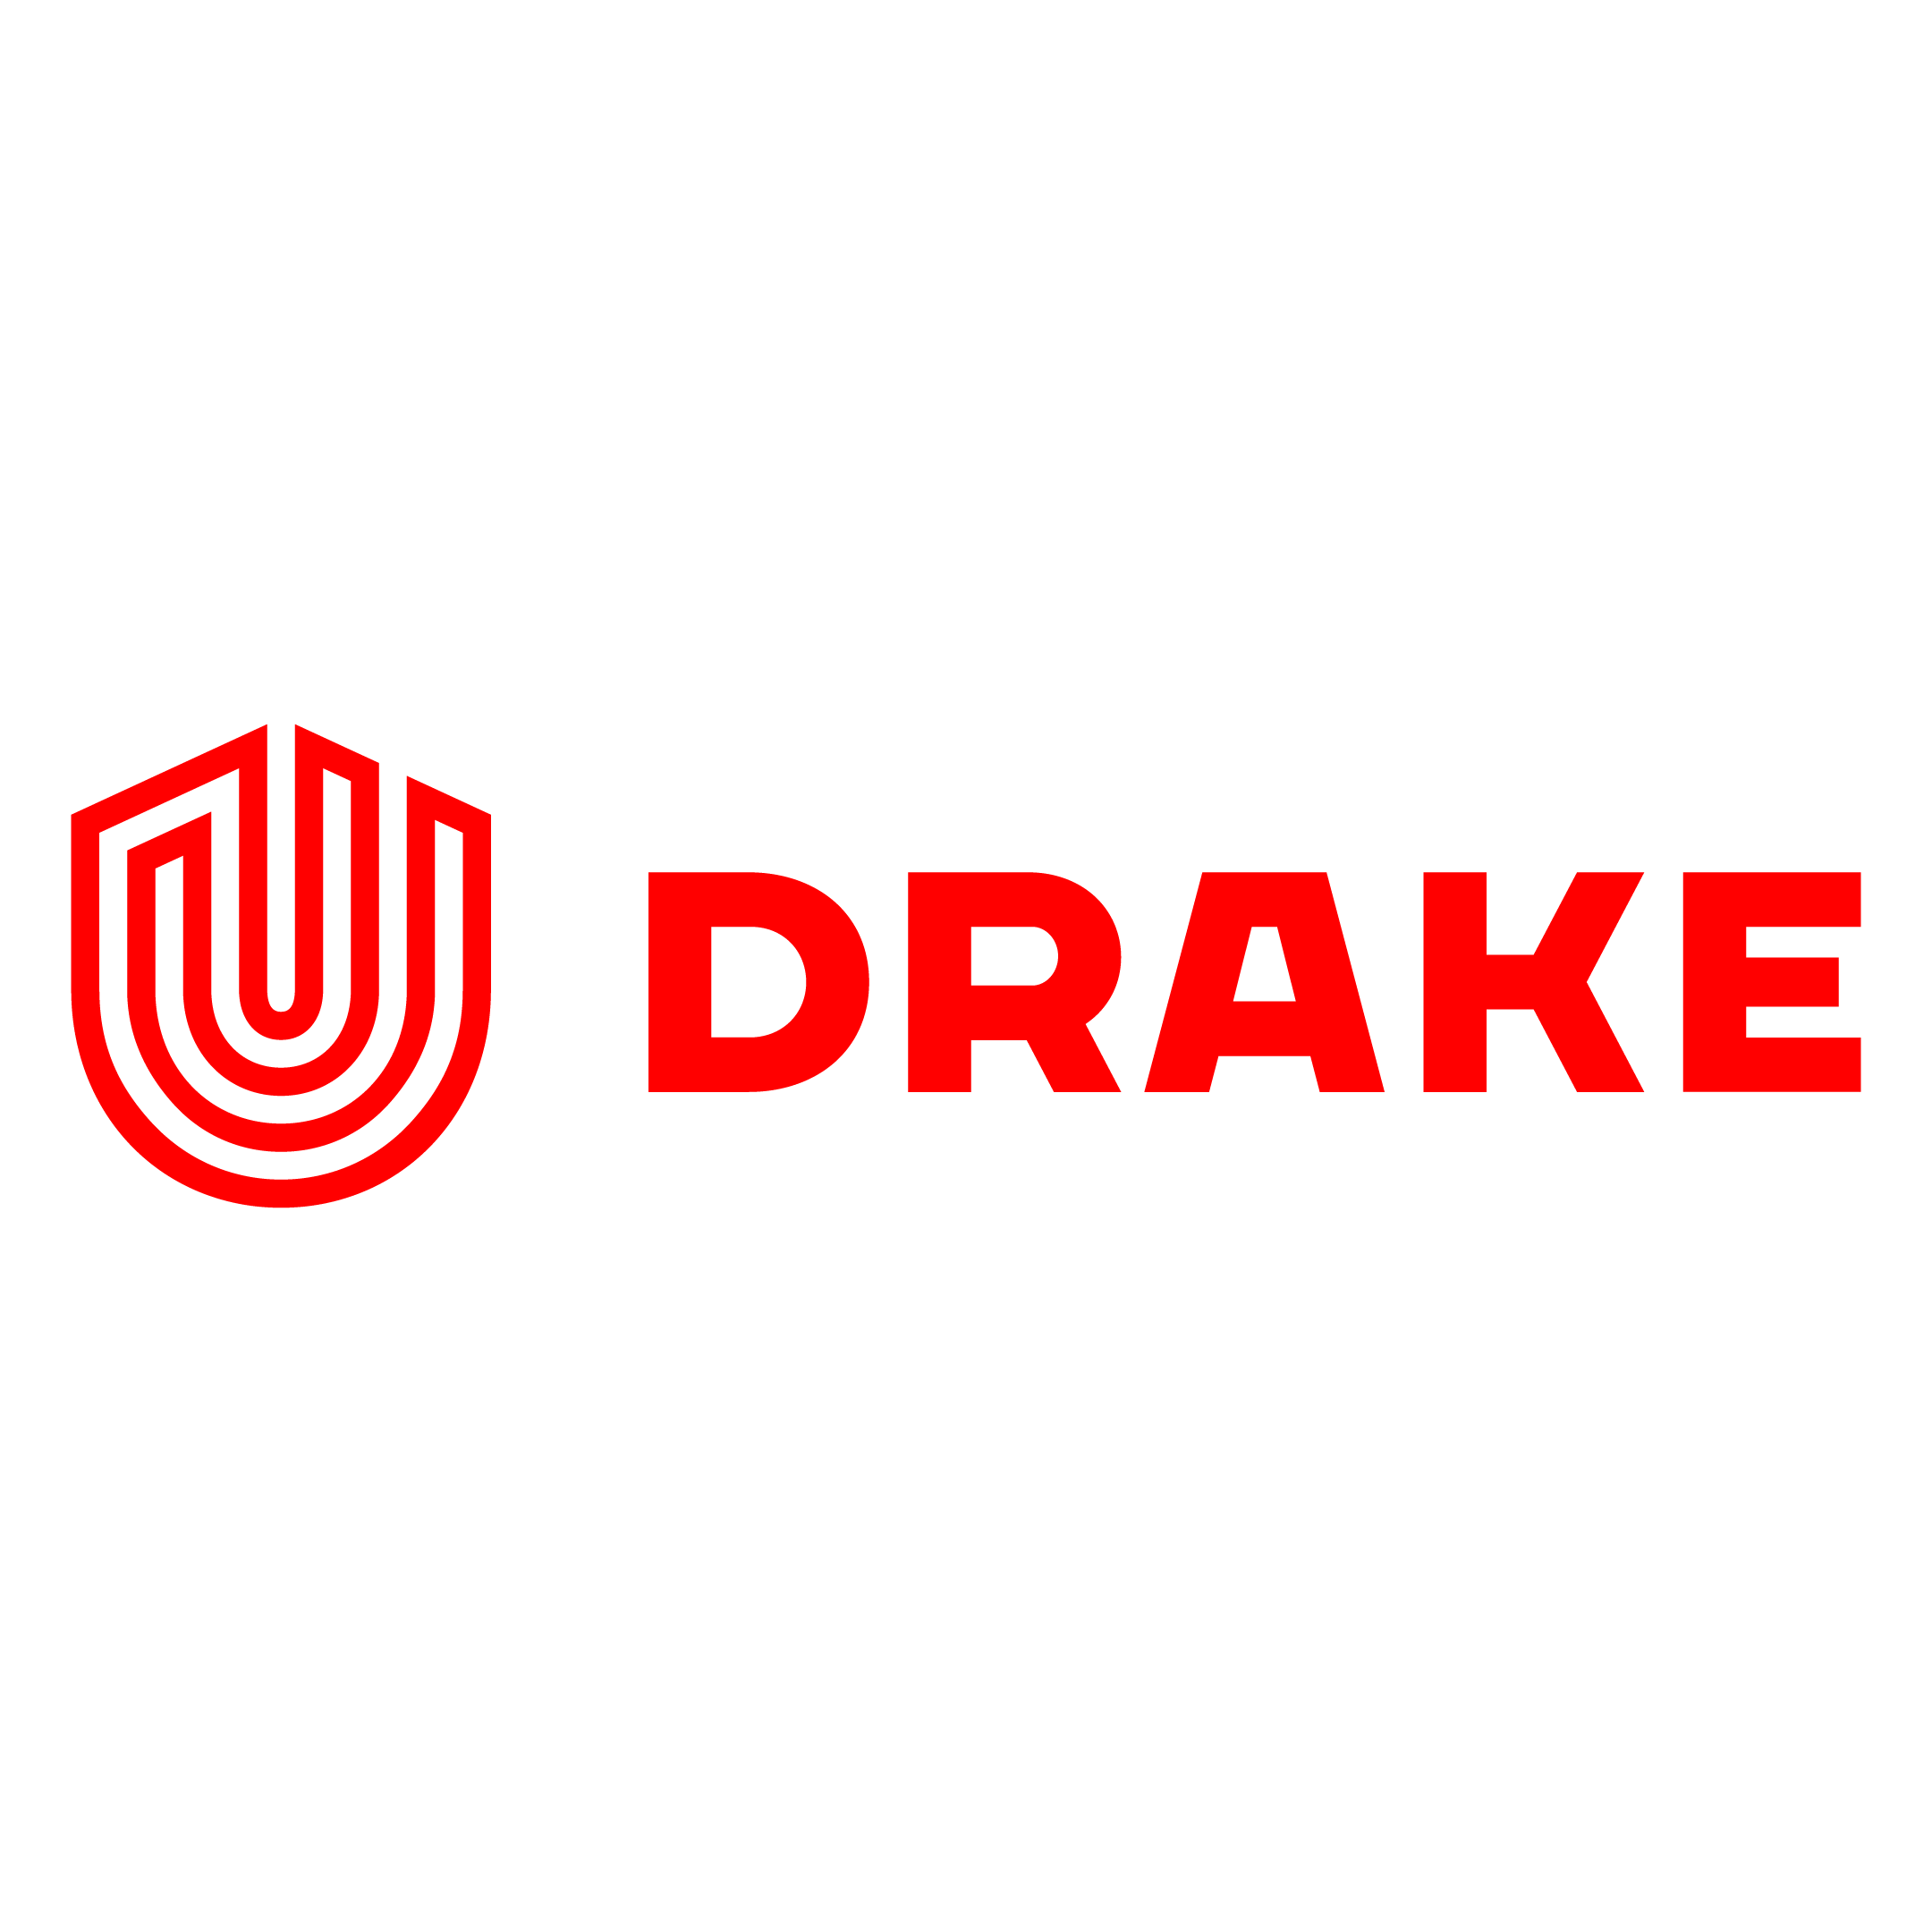 Drake Cement